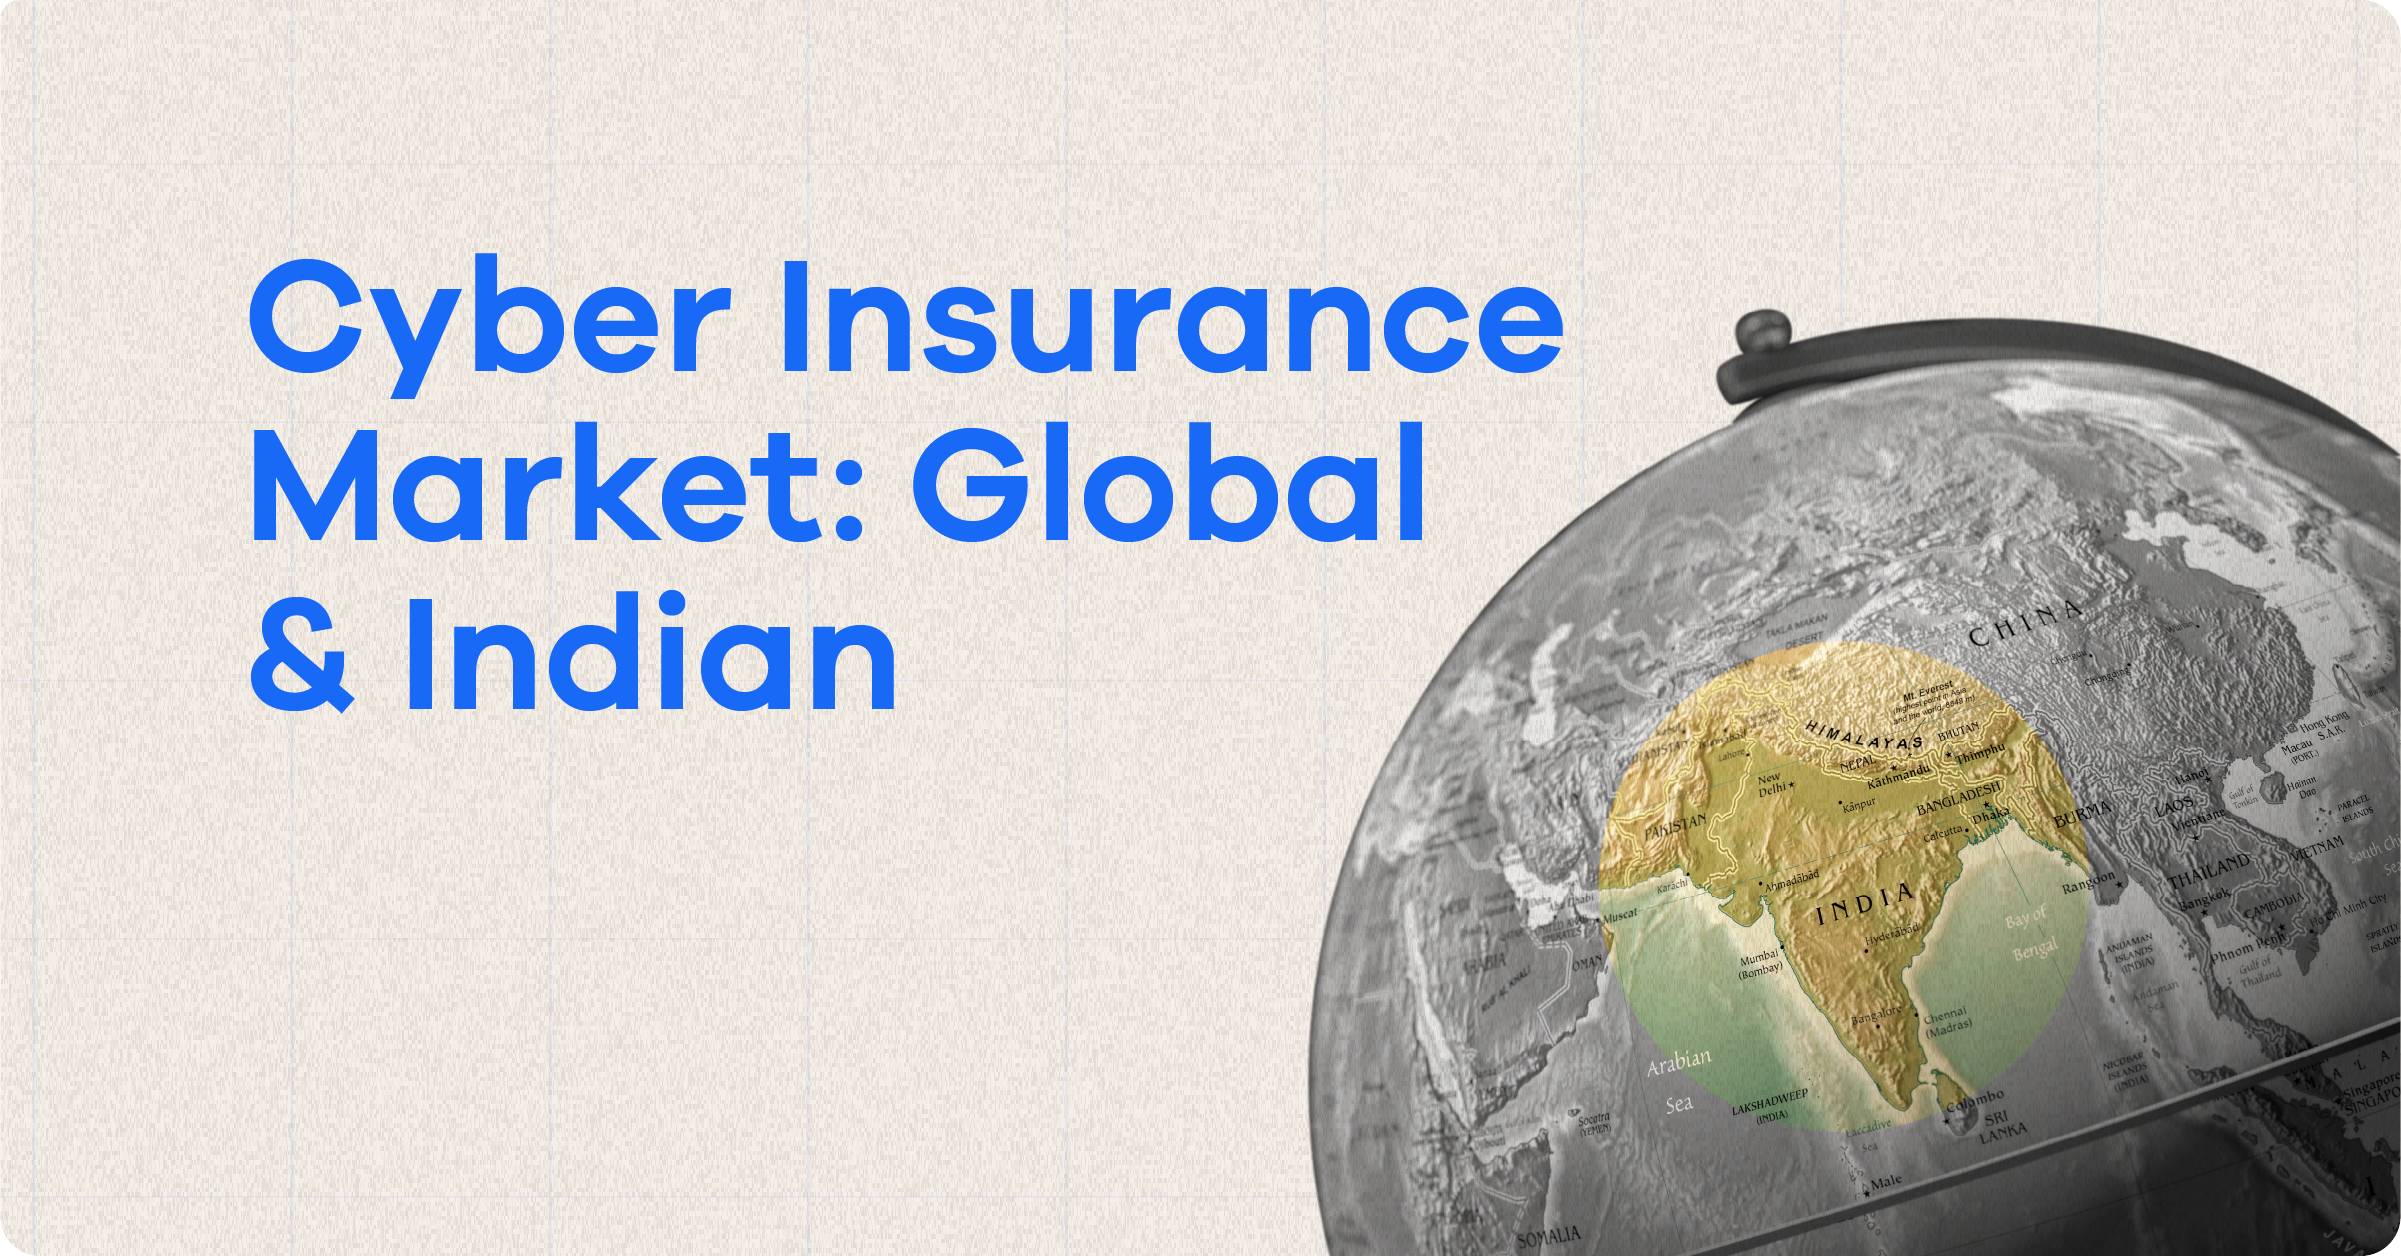 Cyber Insurance Market: Global & Indian